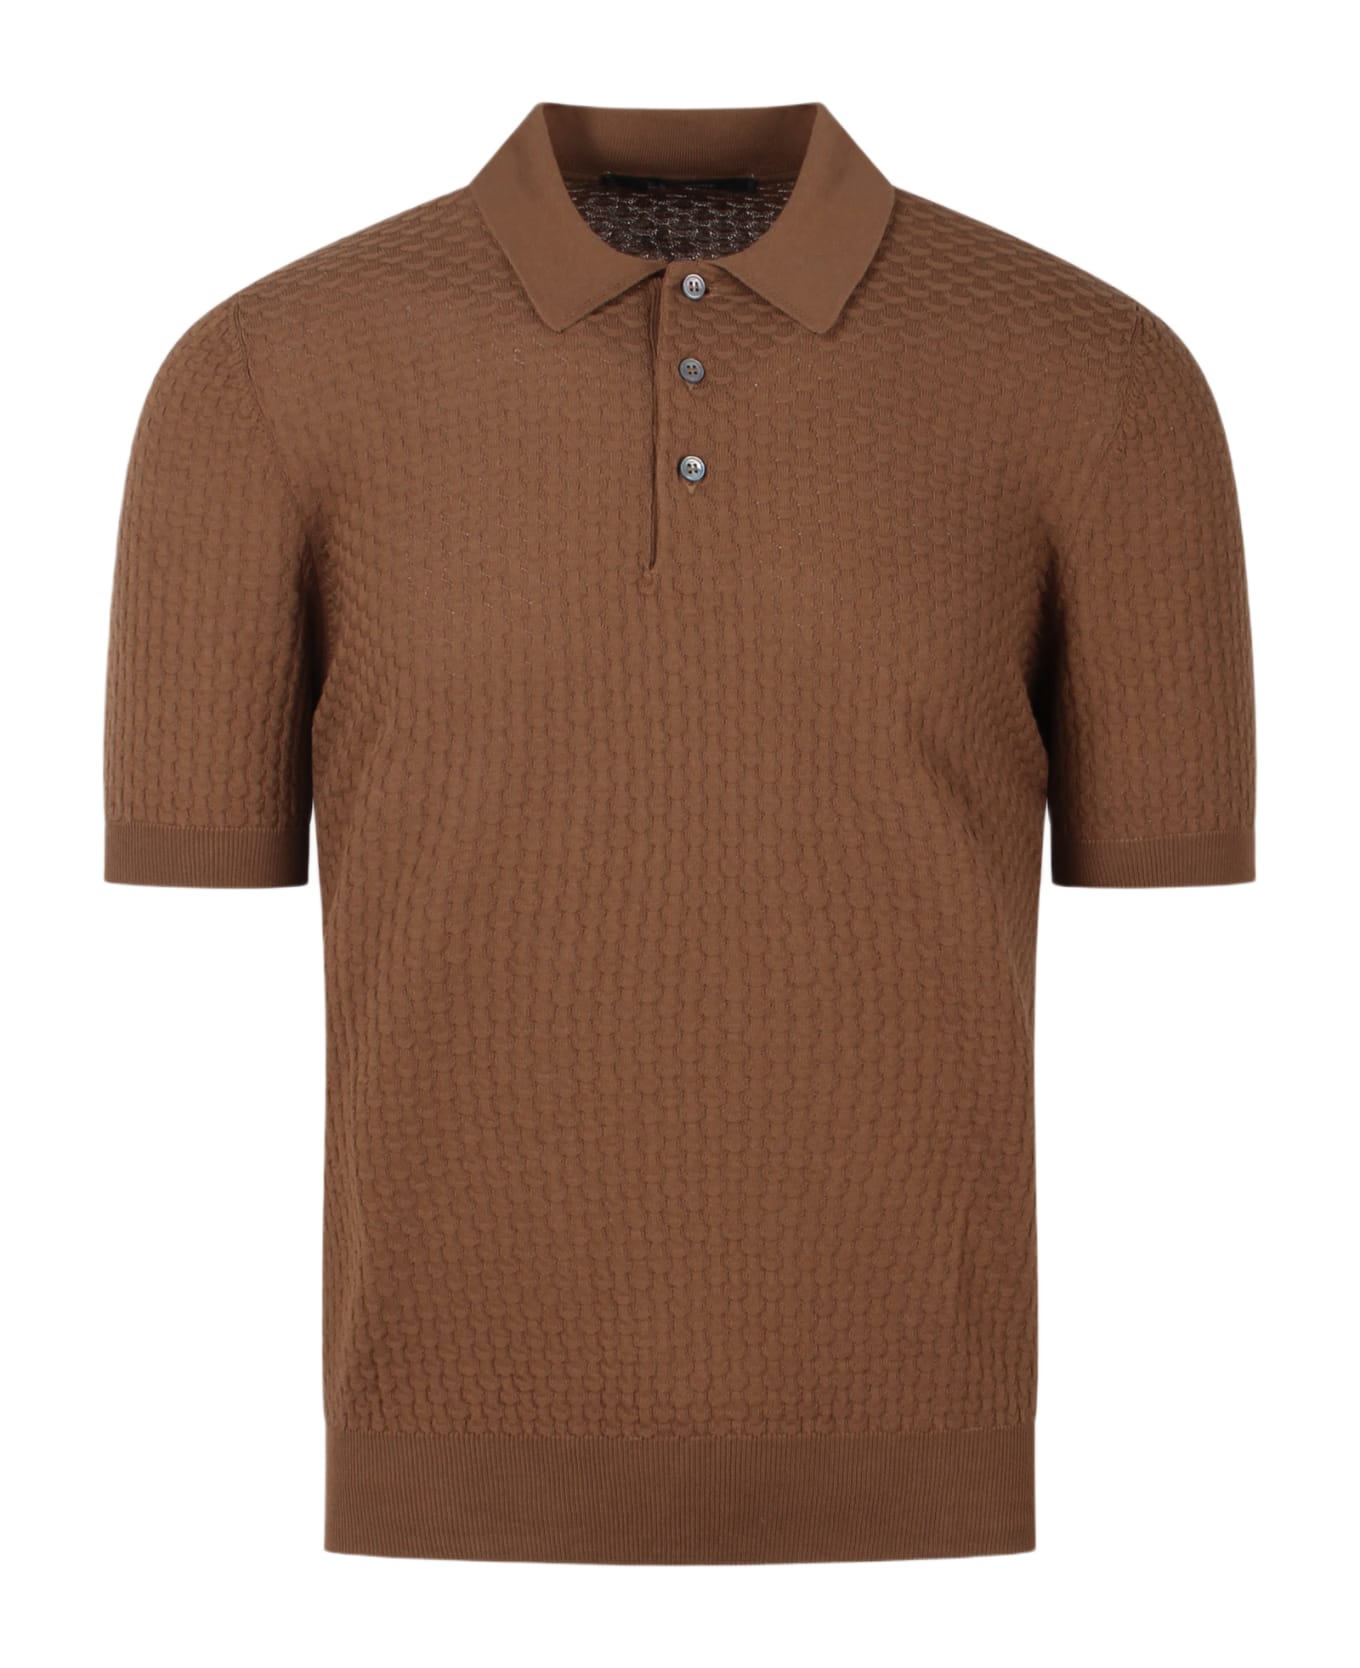 Tagliatore 3d Knit Polo Shirt - Brown